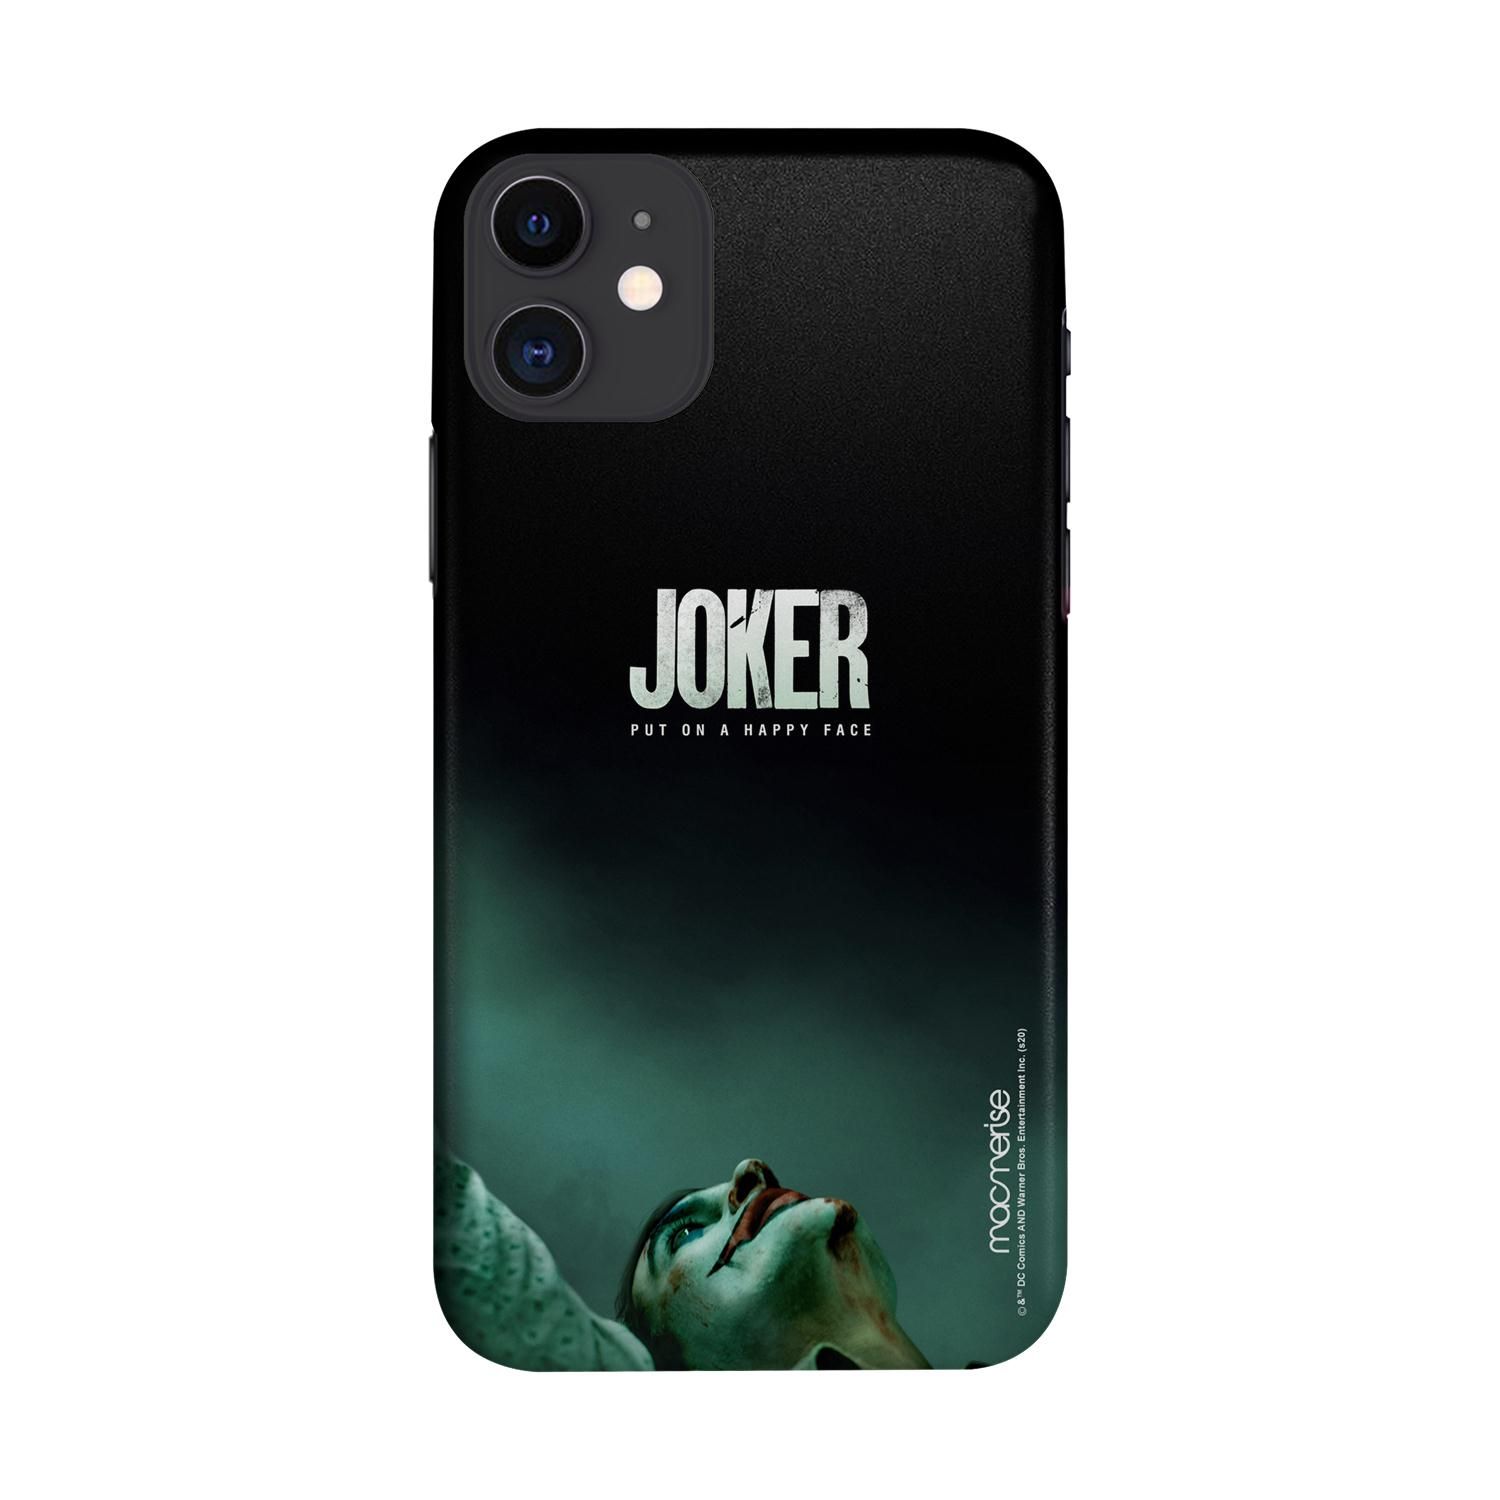 Buy Rise of the Joker - Sleek Phone Case for iPhone 11 Online